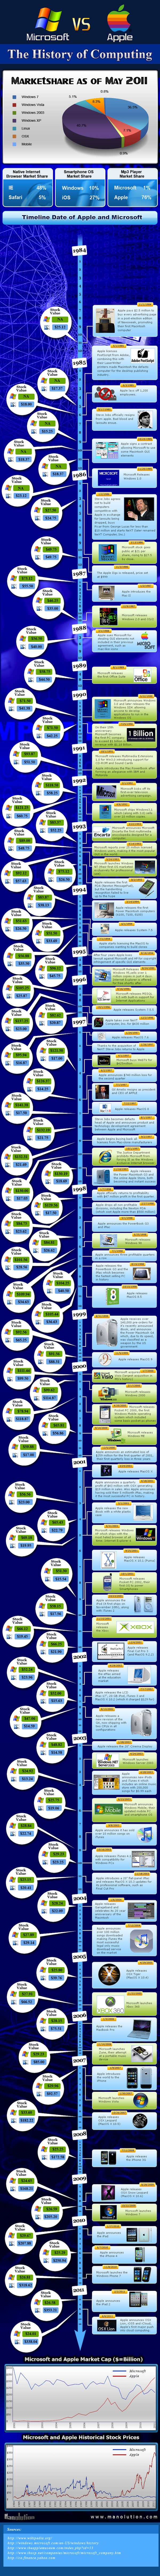 History Of Computing Apple Microsoft